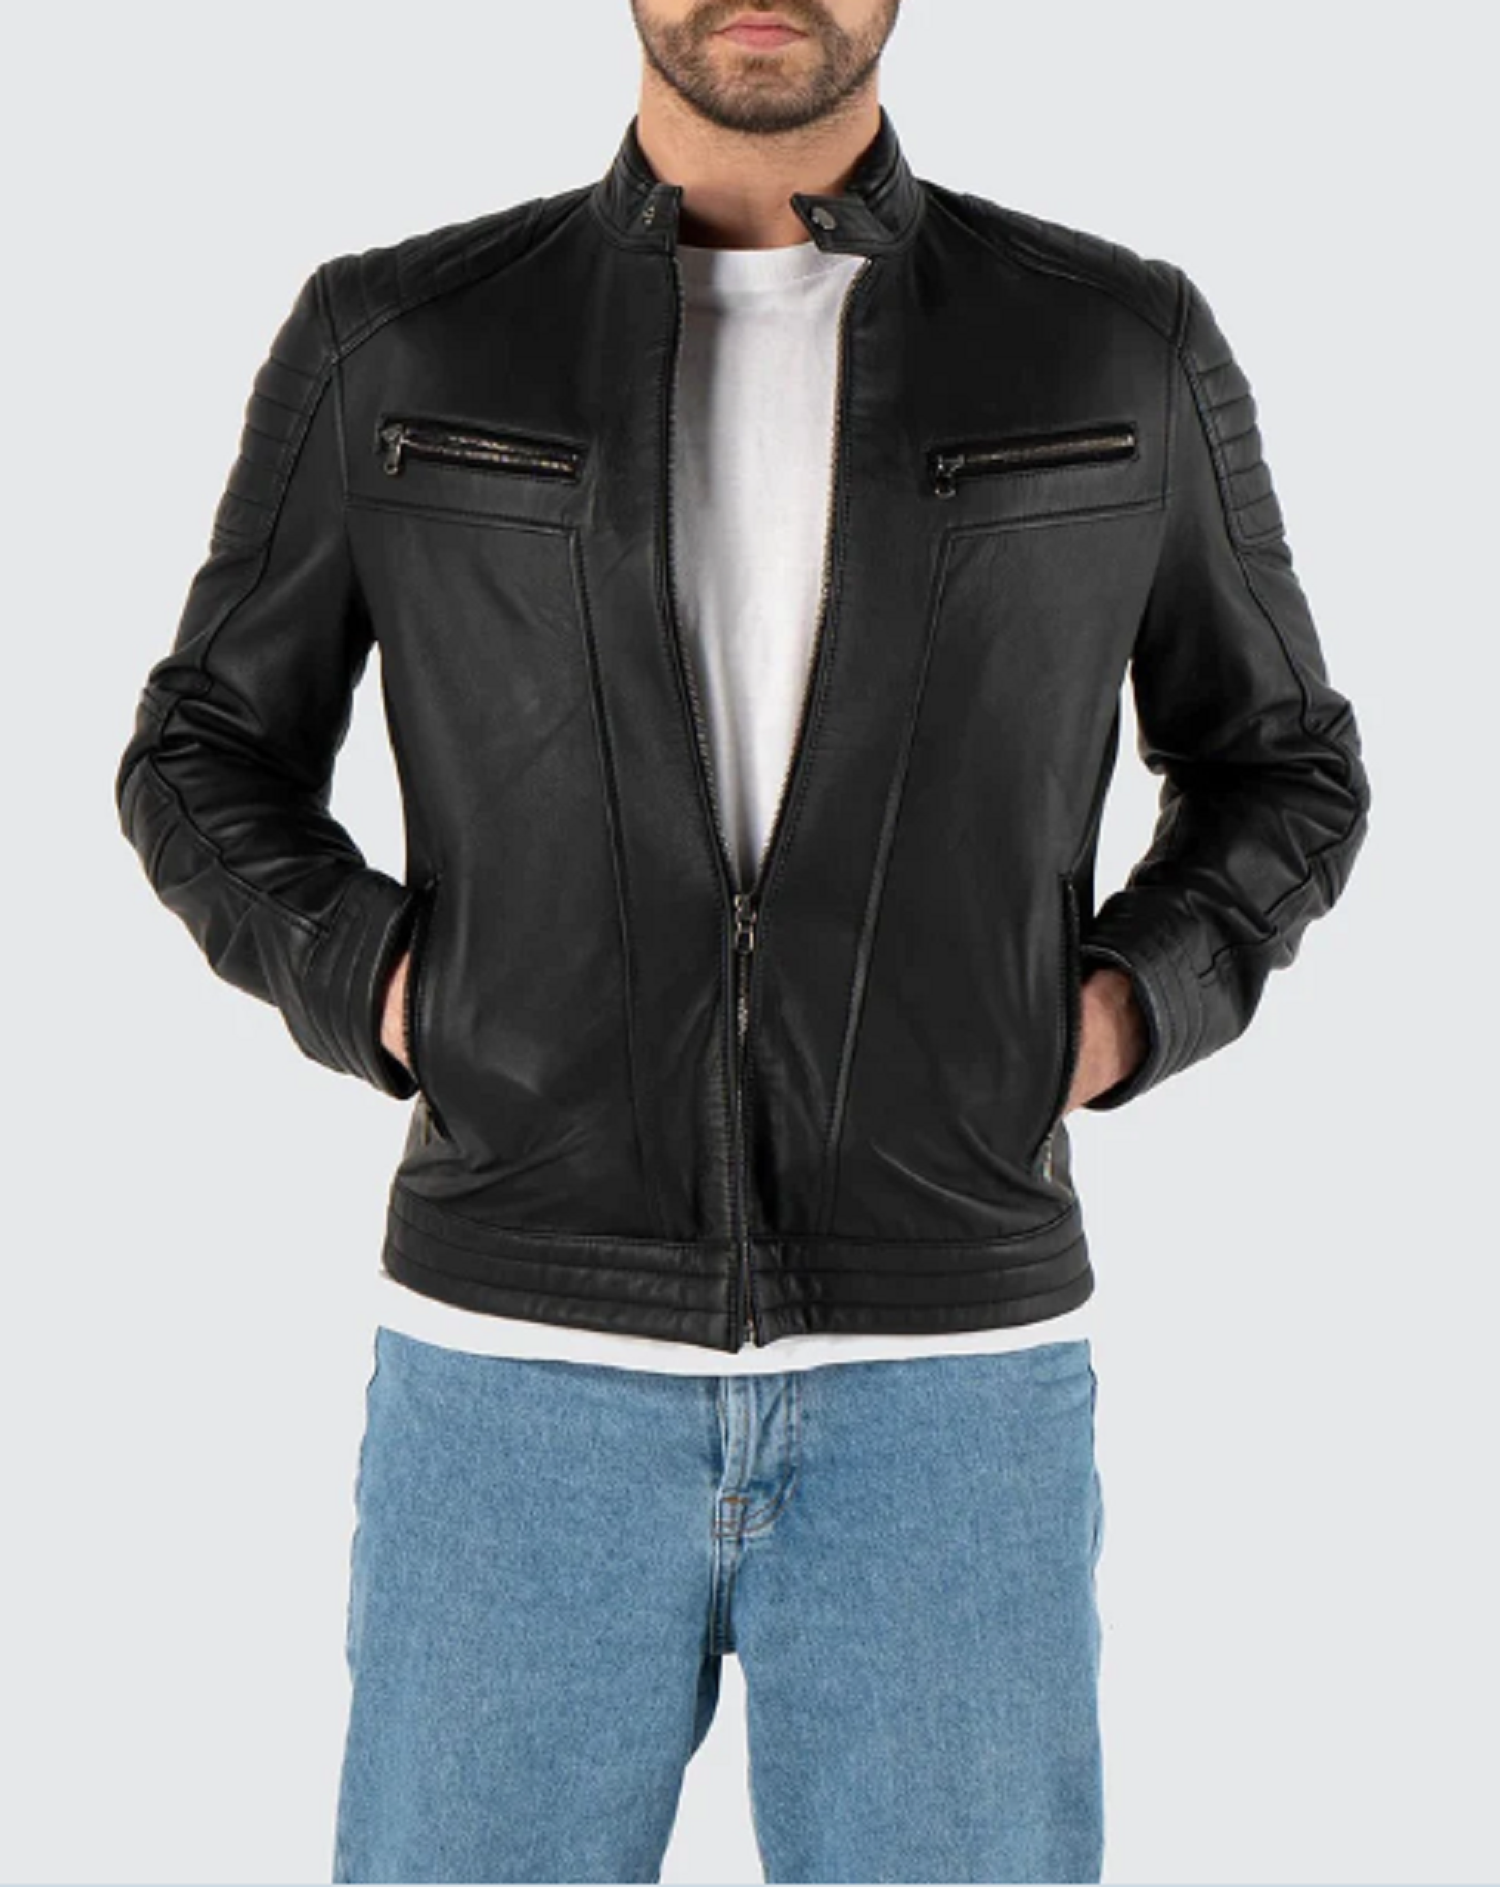 Elegance Meets Edge: JINUS Arturo Genuine Leather Black Men's Coat Jacket!